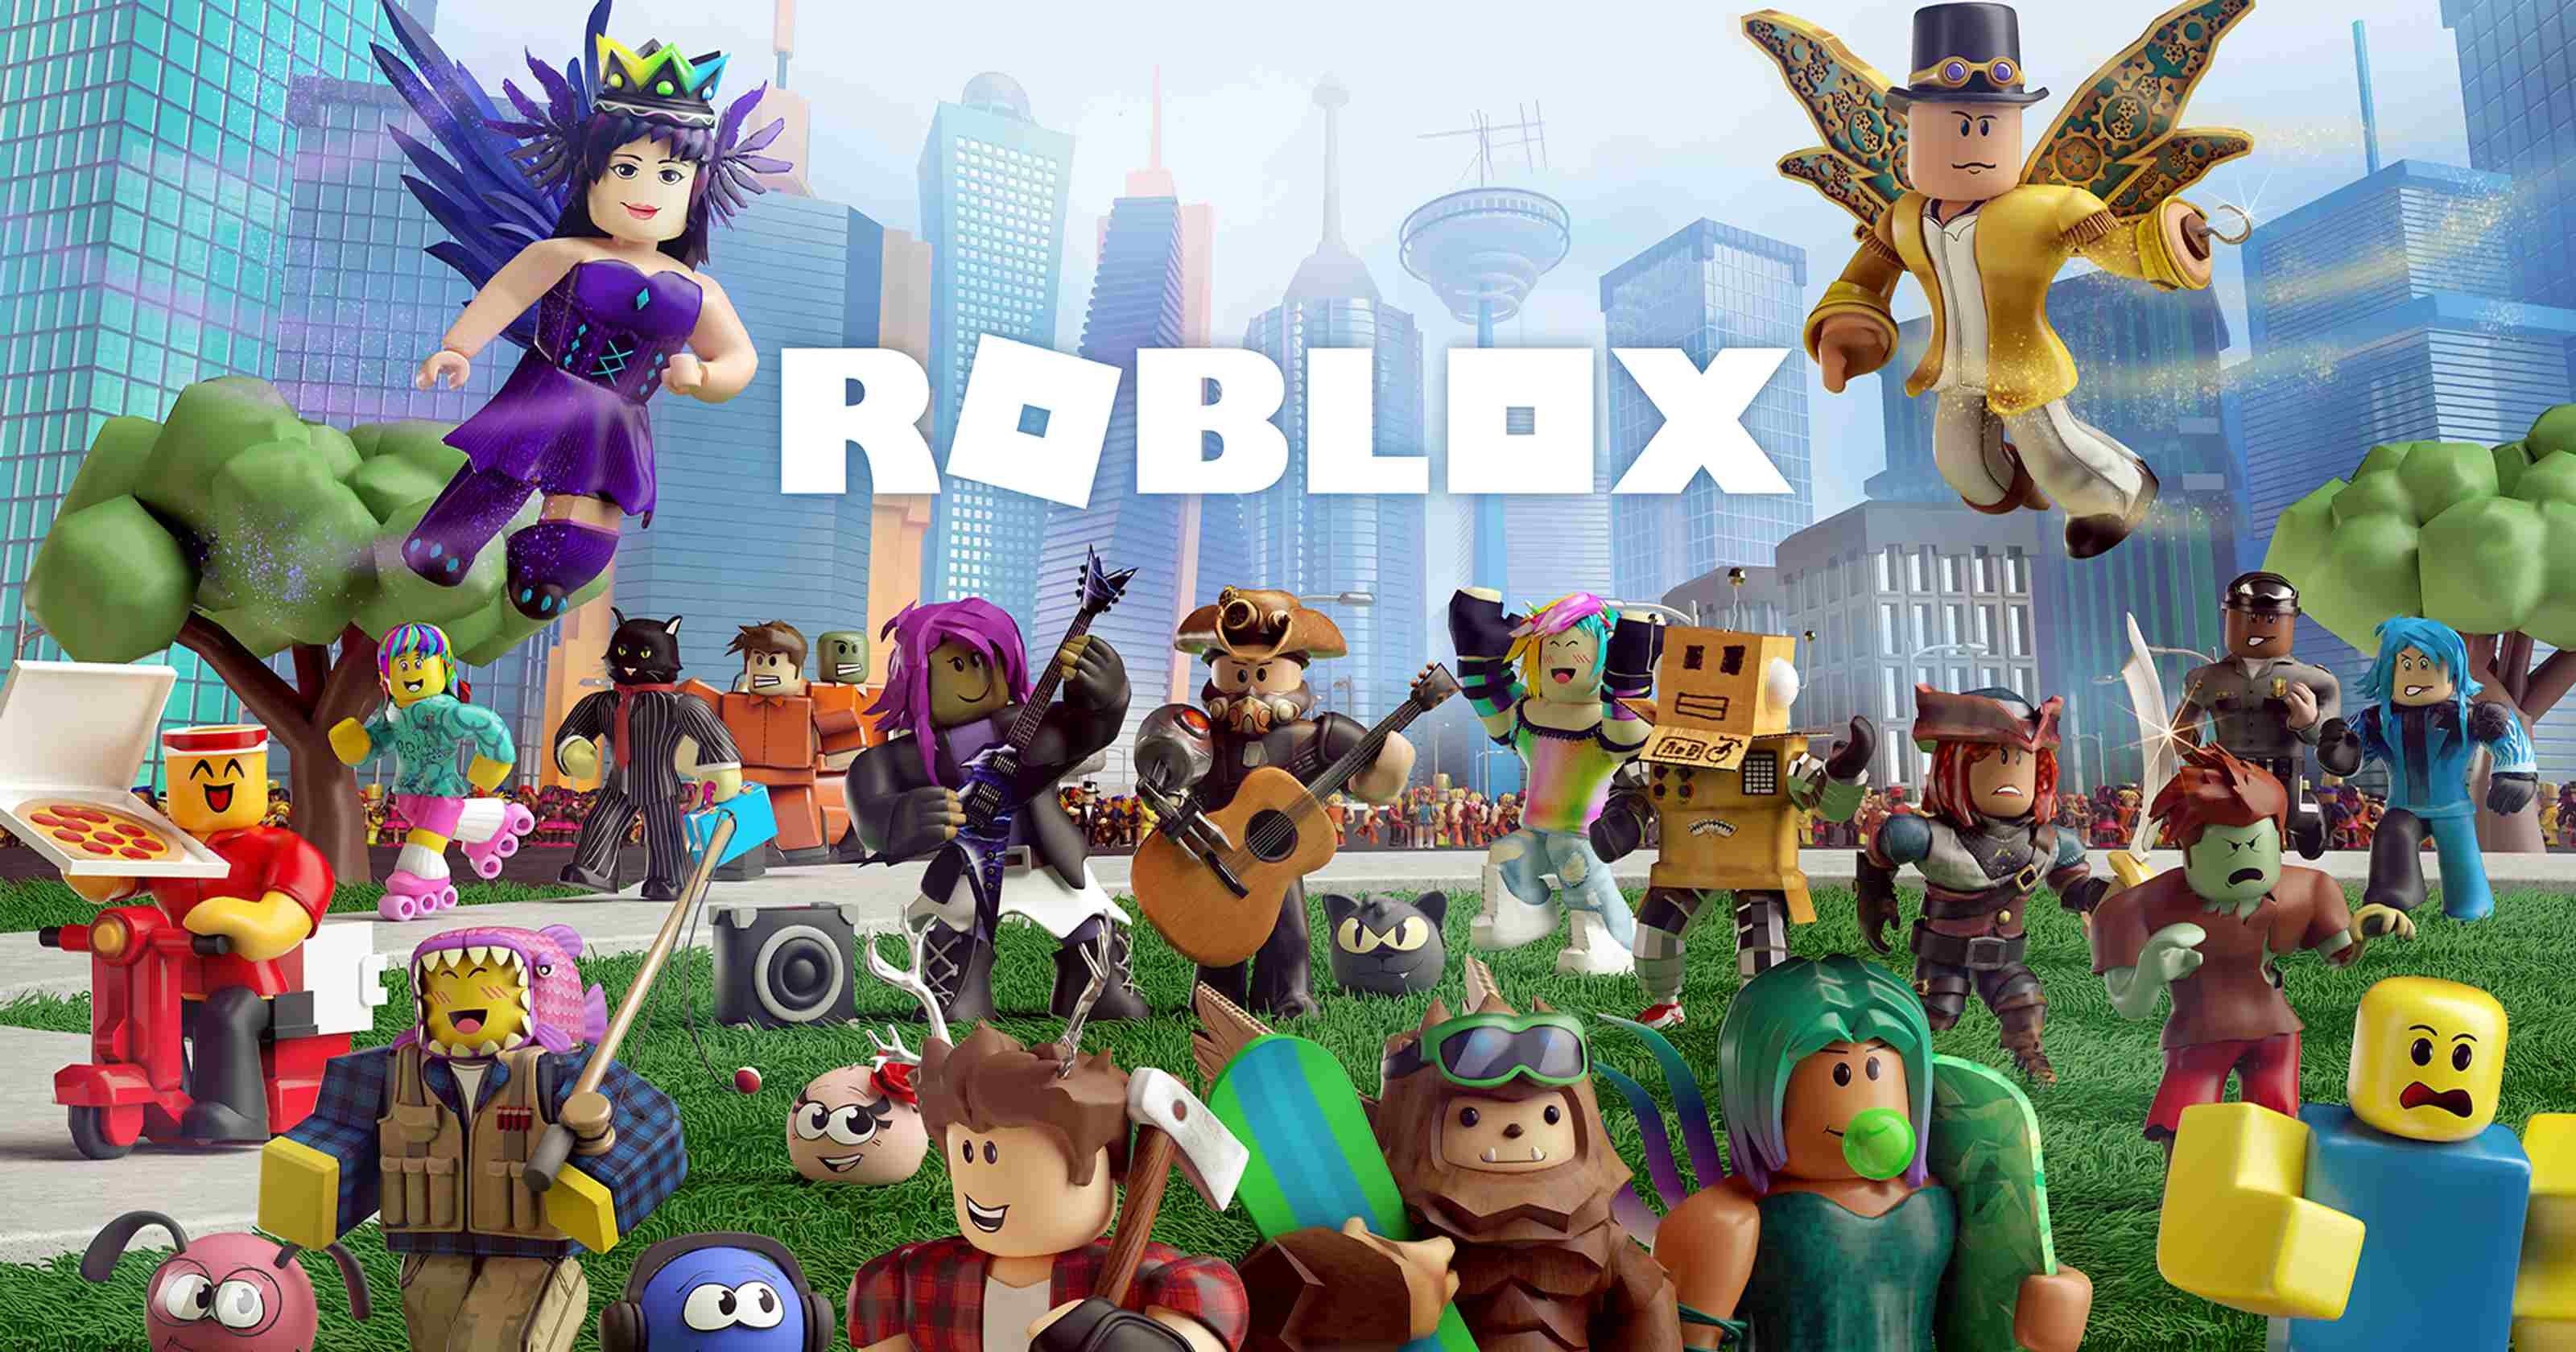 Roblox Gaming Character Wallpaper, HD Games 4K Wallpapers, Images